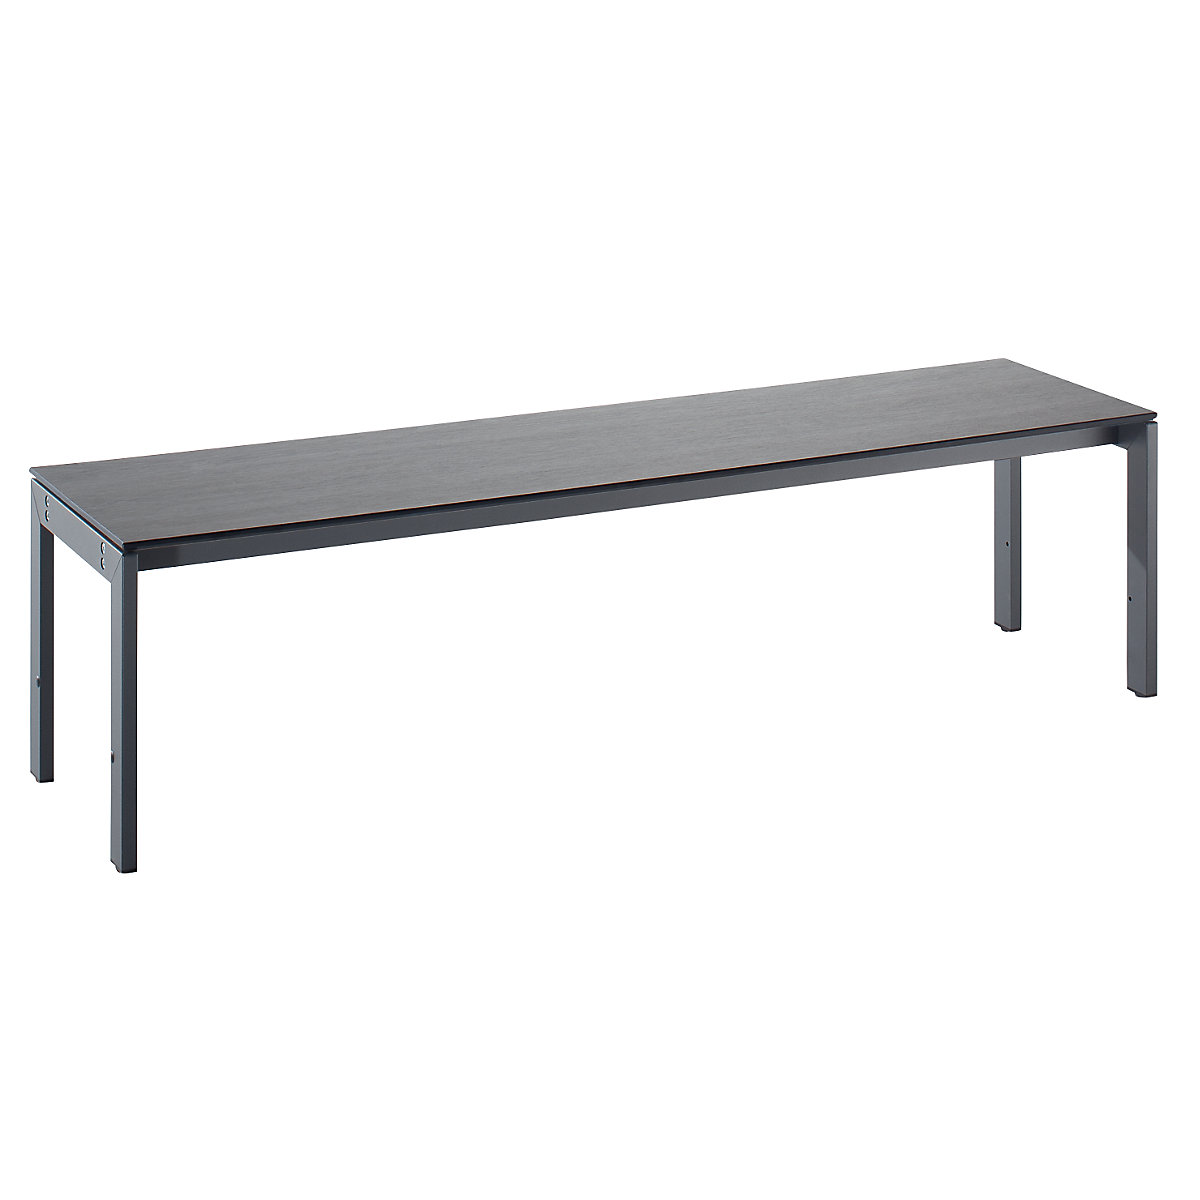 EUROKRAFTpro – Changing room bench with steel frame, LxHxD 1500 x 415 x 400 mm, oak silver seat